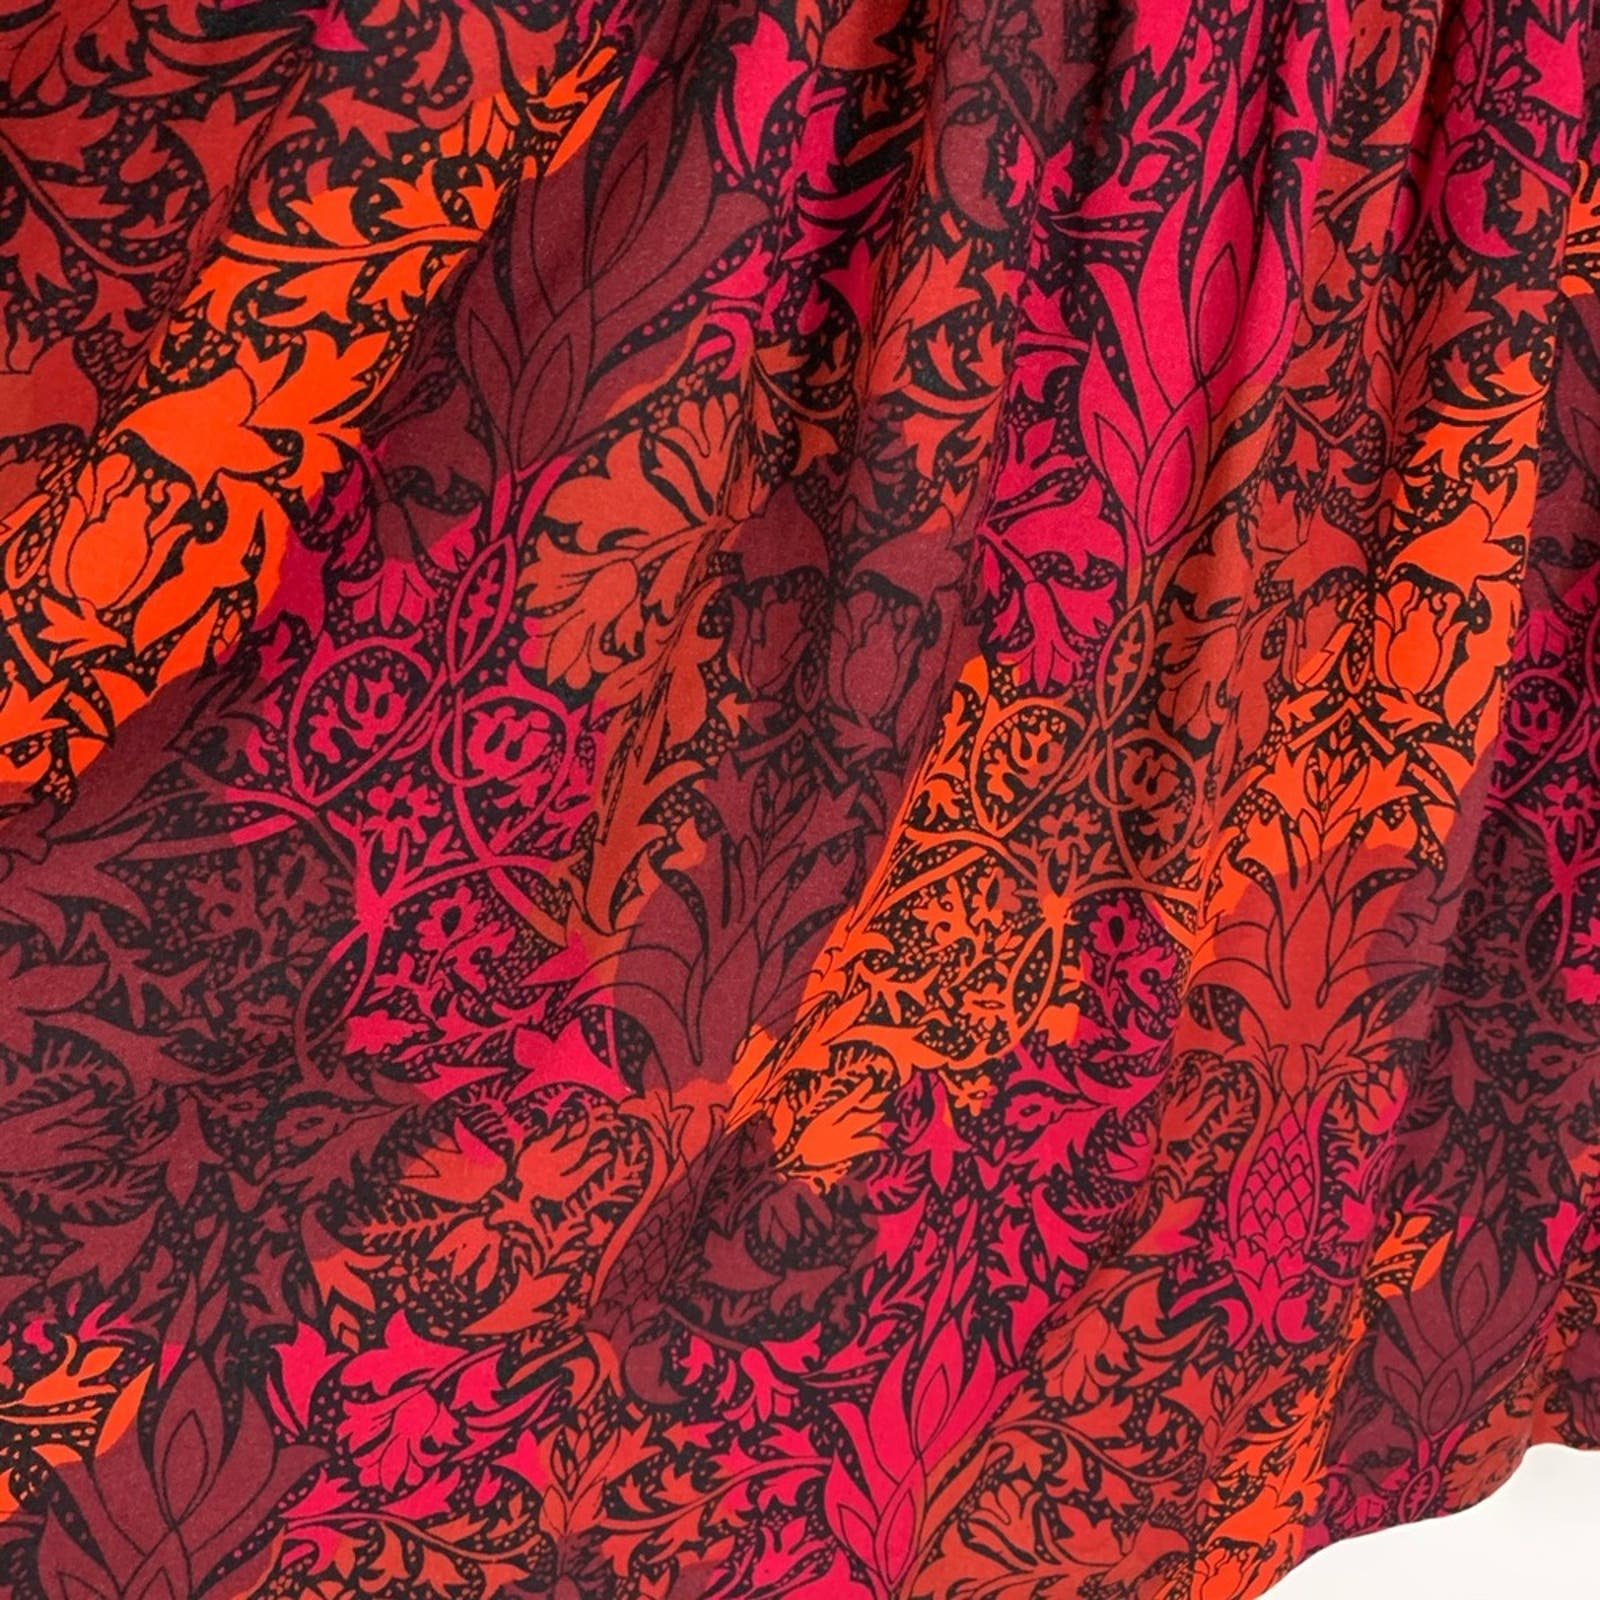 large selection Handmade Rayon Flowy Red Pattern Midi Skirt Small Iu8Ms6PVA Online Shop